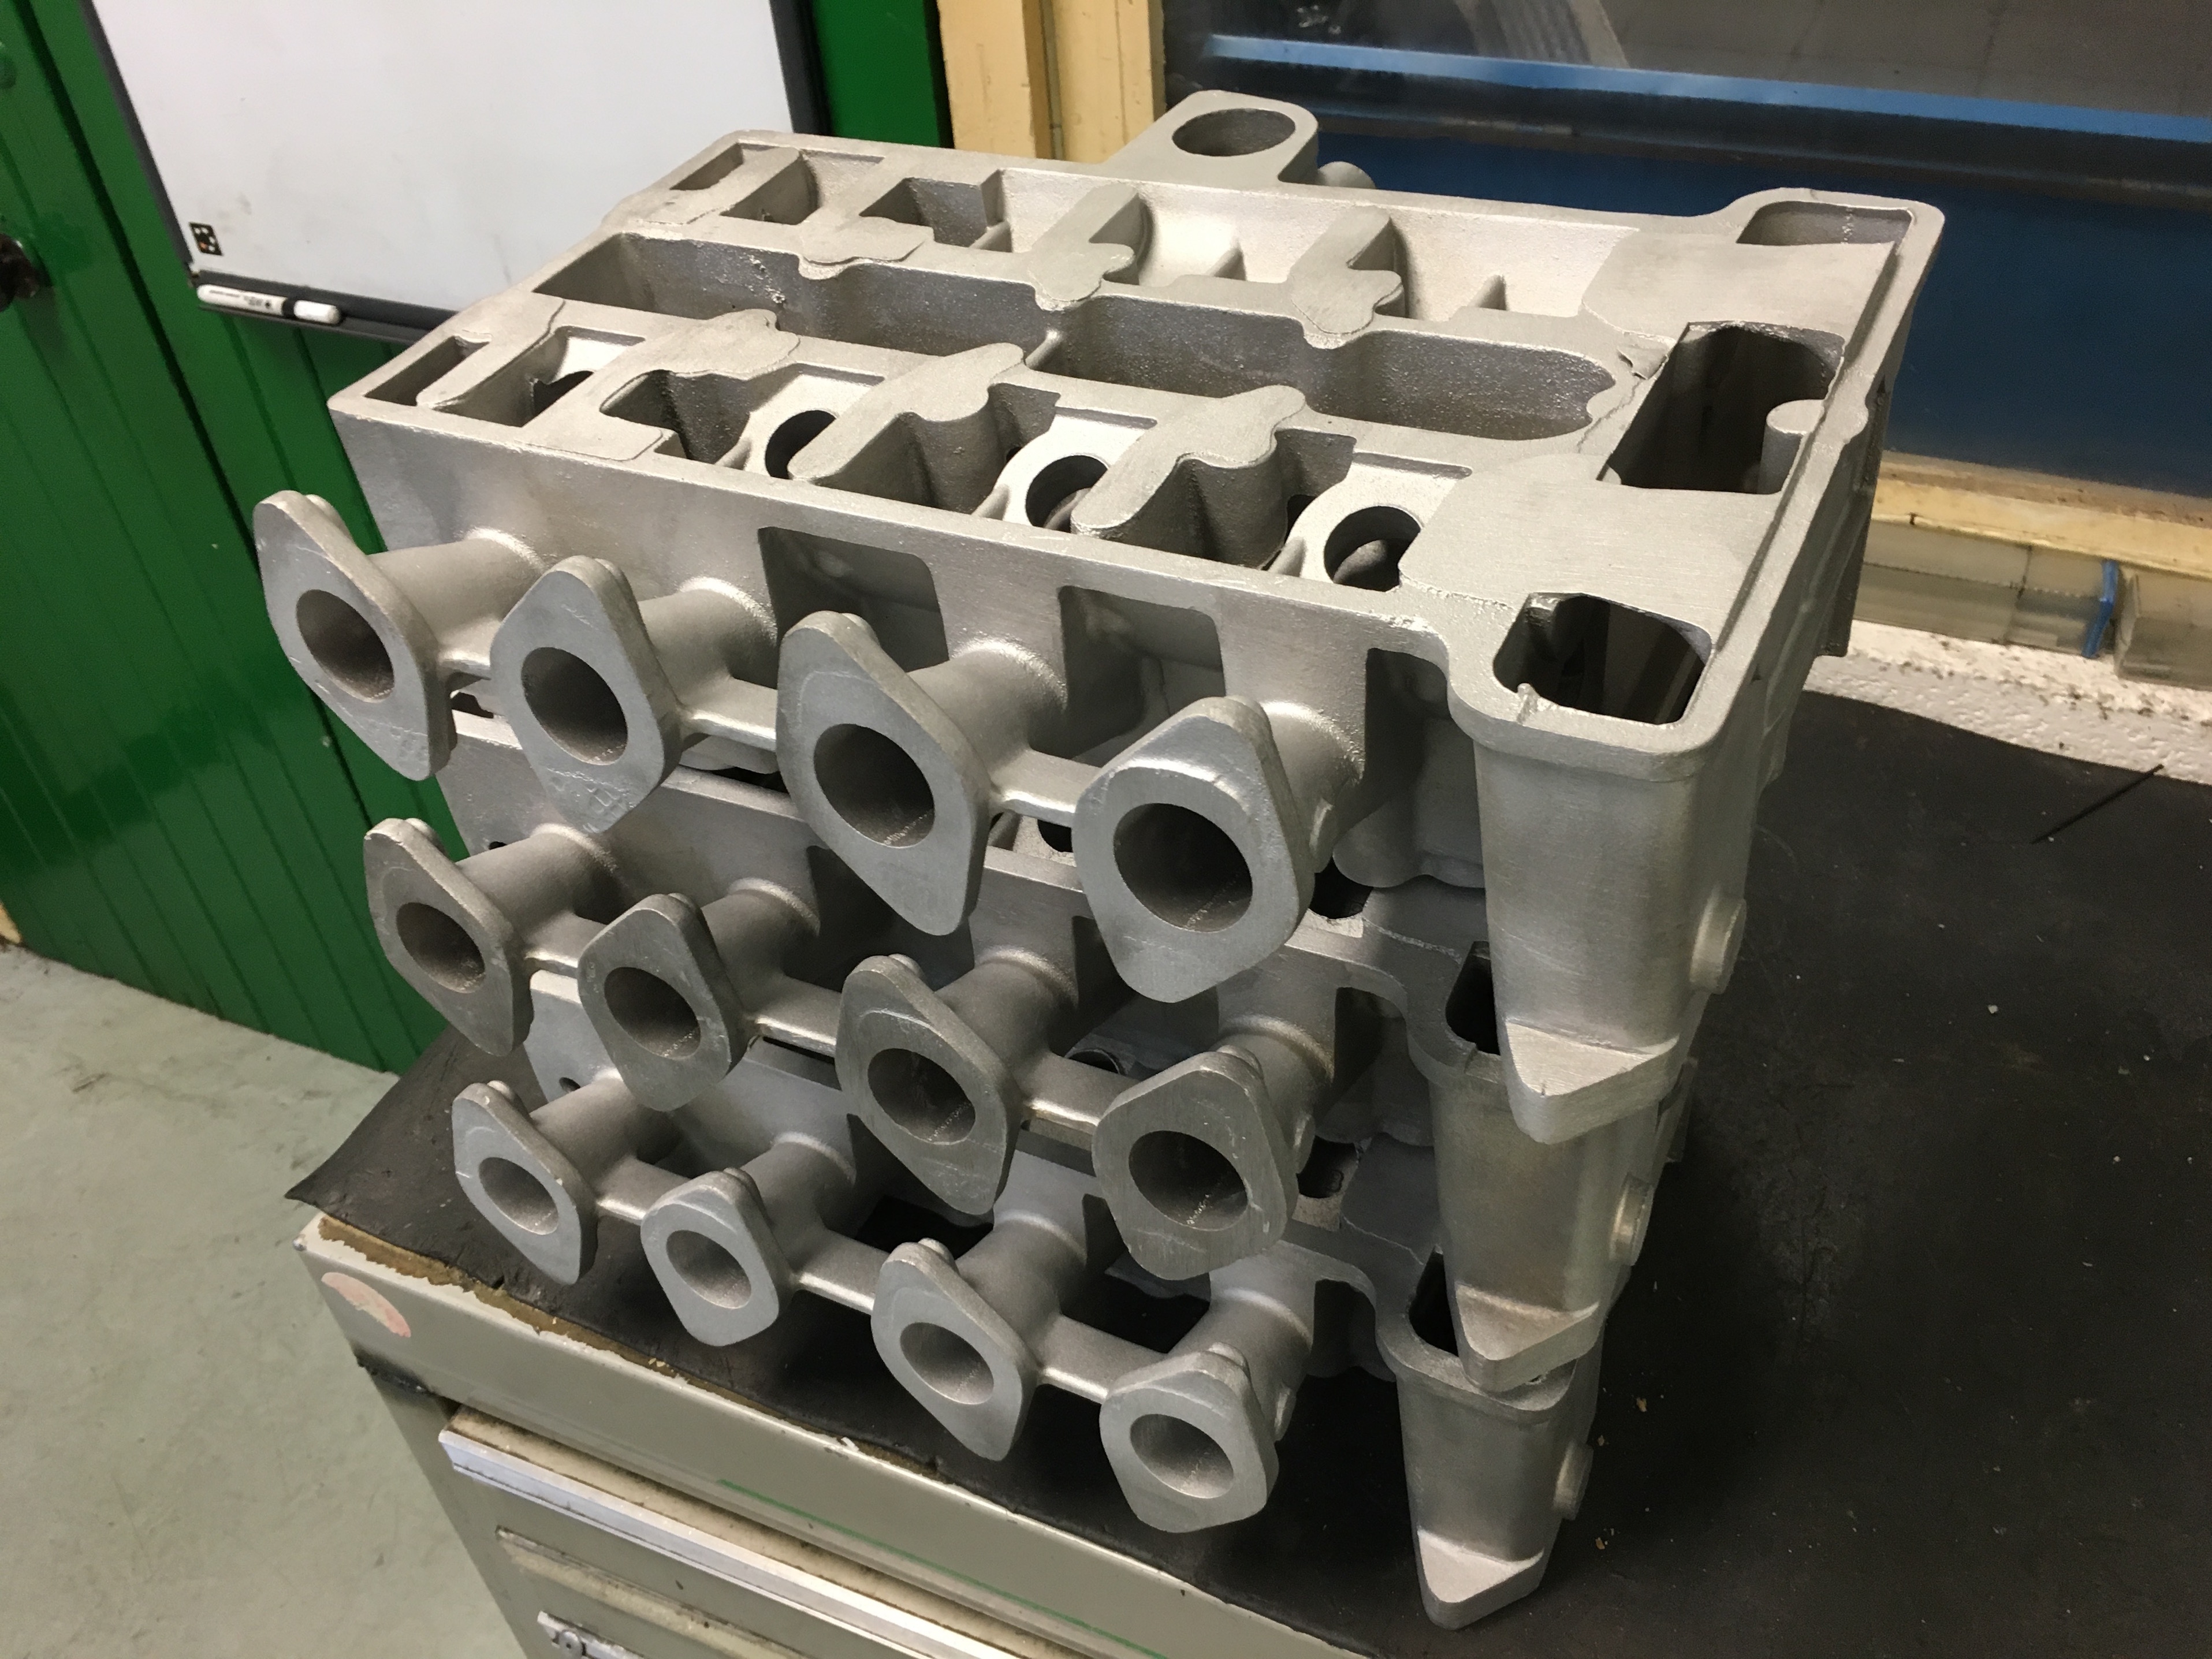 BSD Engineering raw aluminium cylinder head castings ready for machining…